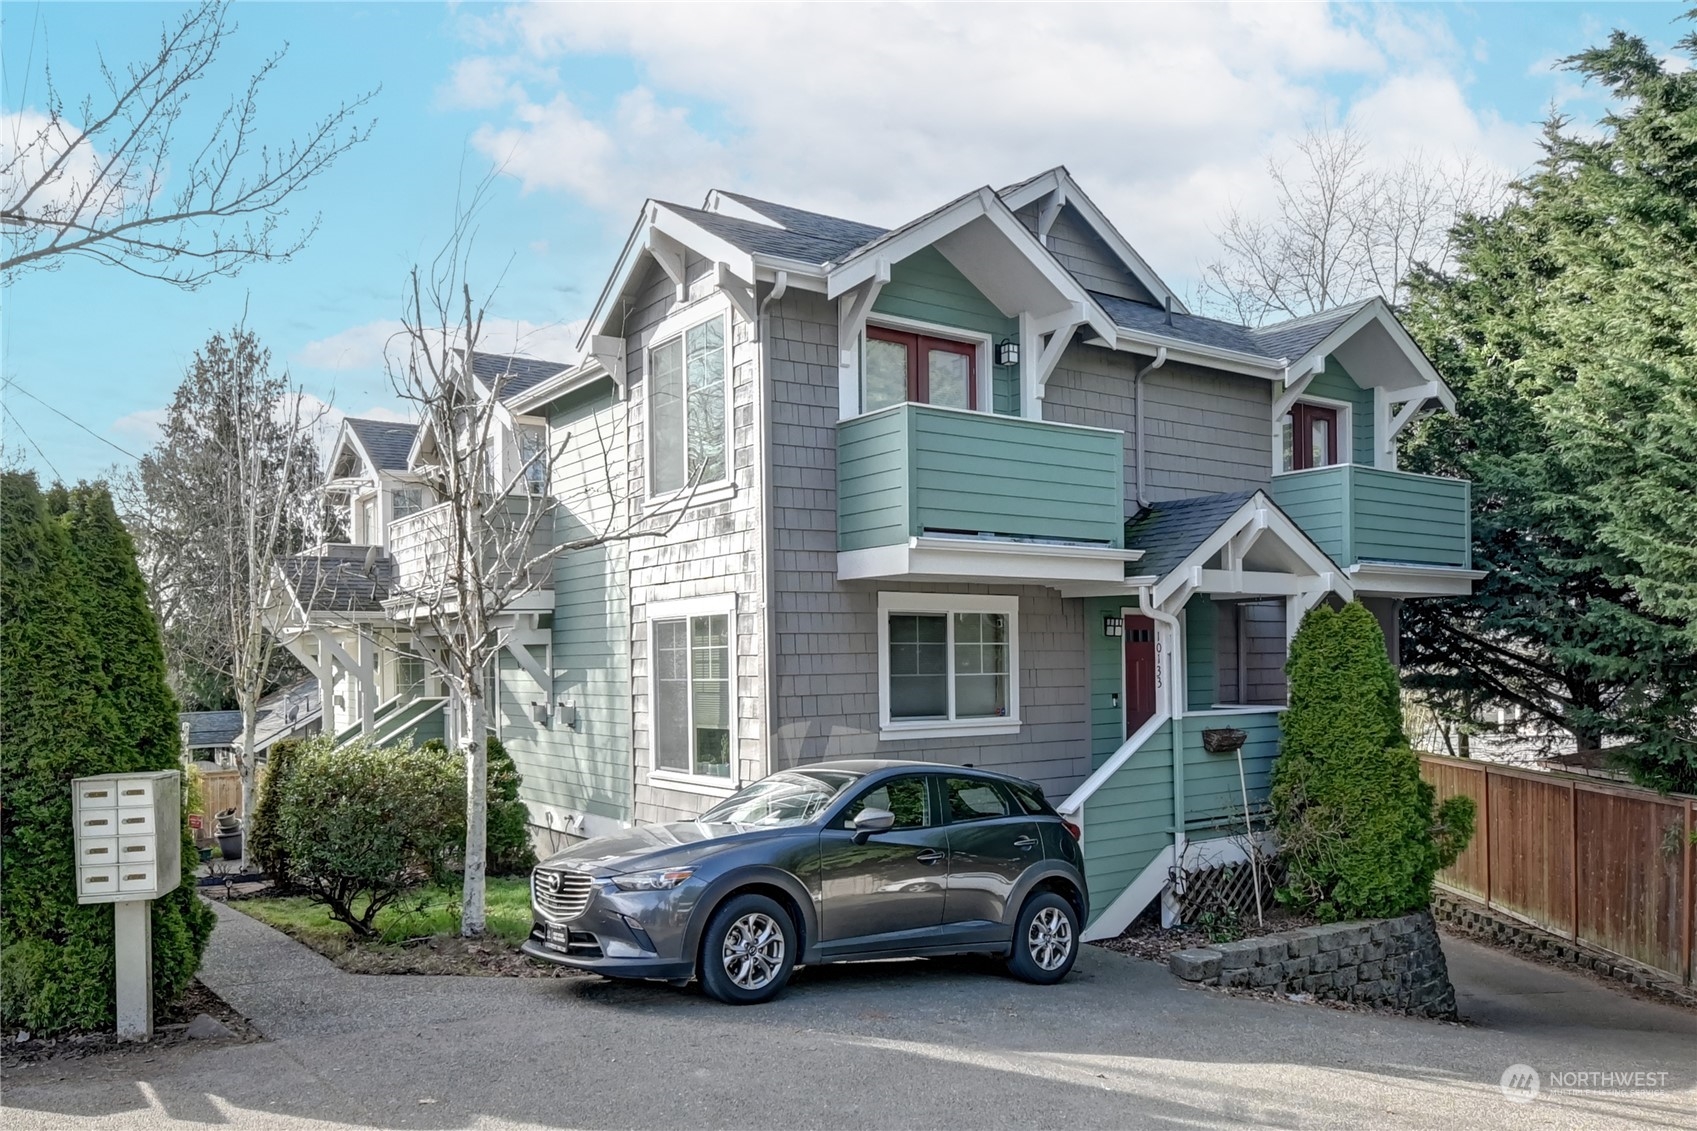 Seattle - Blue Ridge/Richmond Beach (98177), WA Real Estate Housing Market & Trends | Coldwell Banker